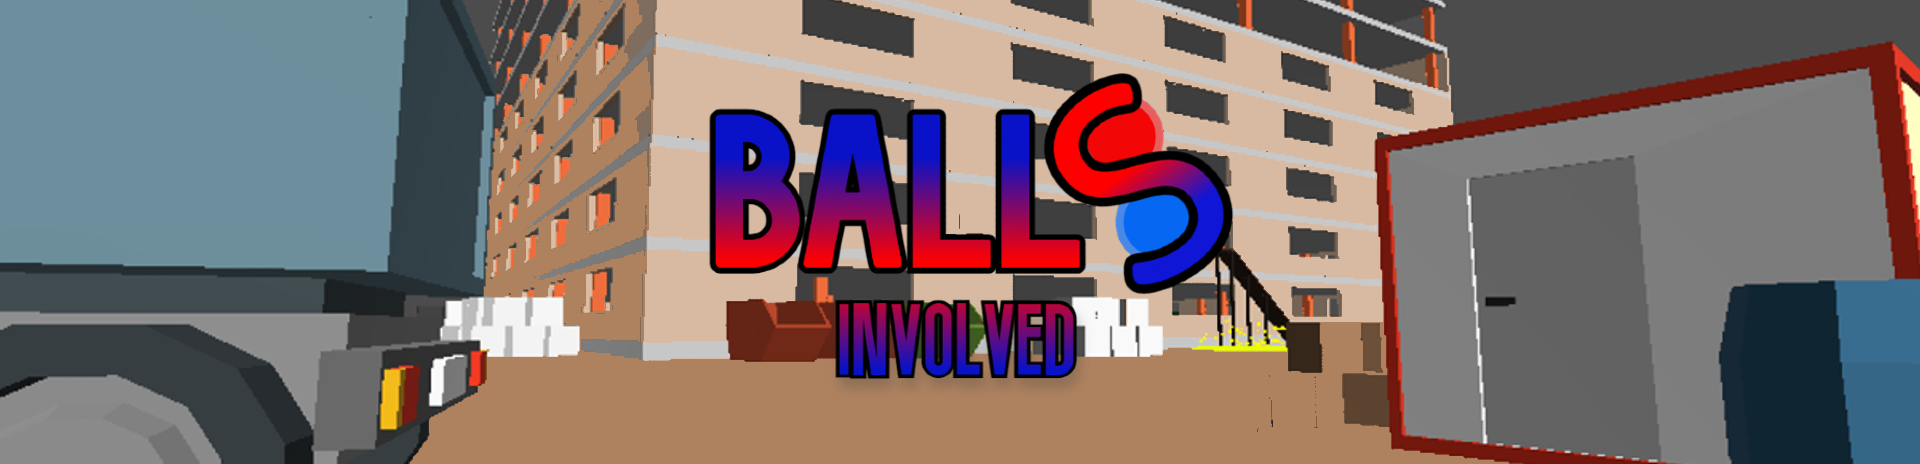 Balls Involved